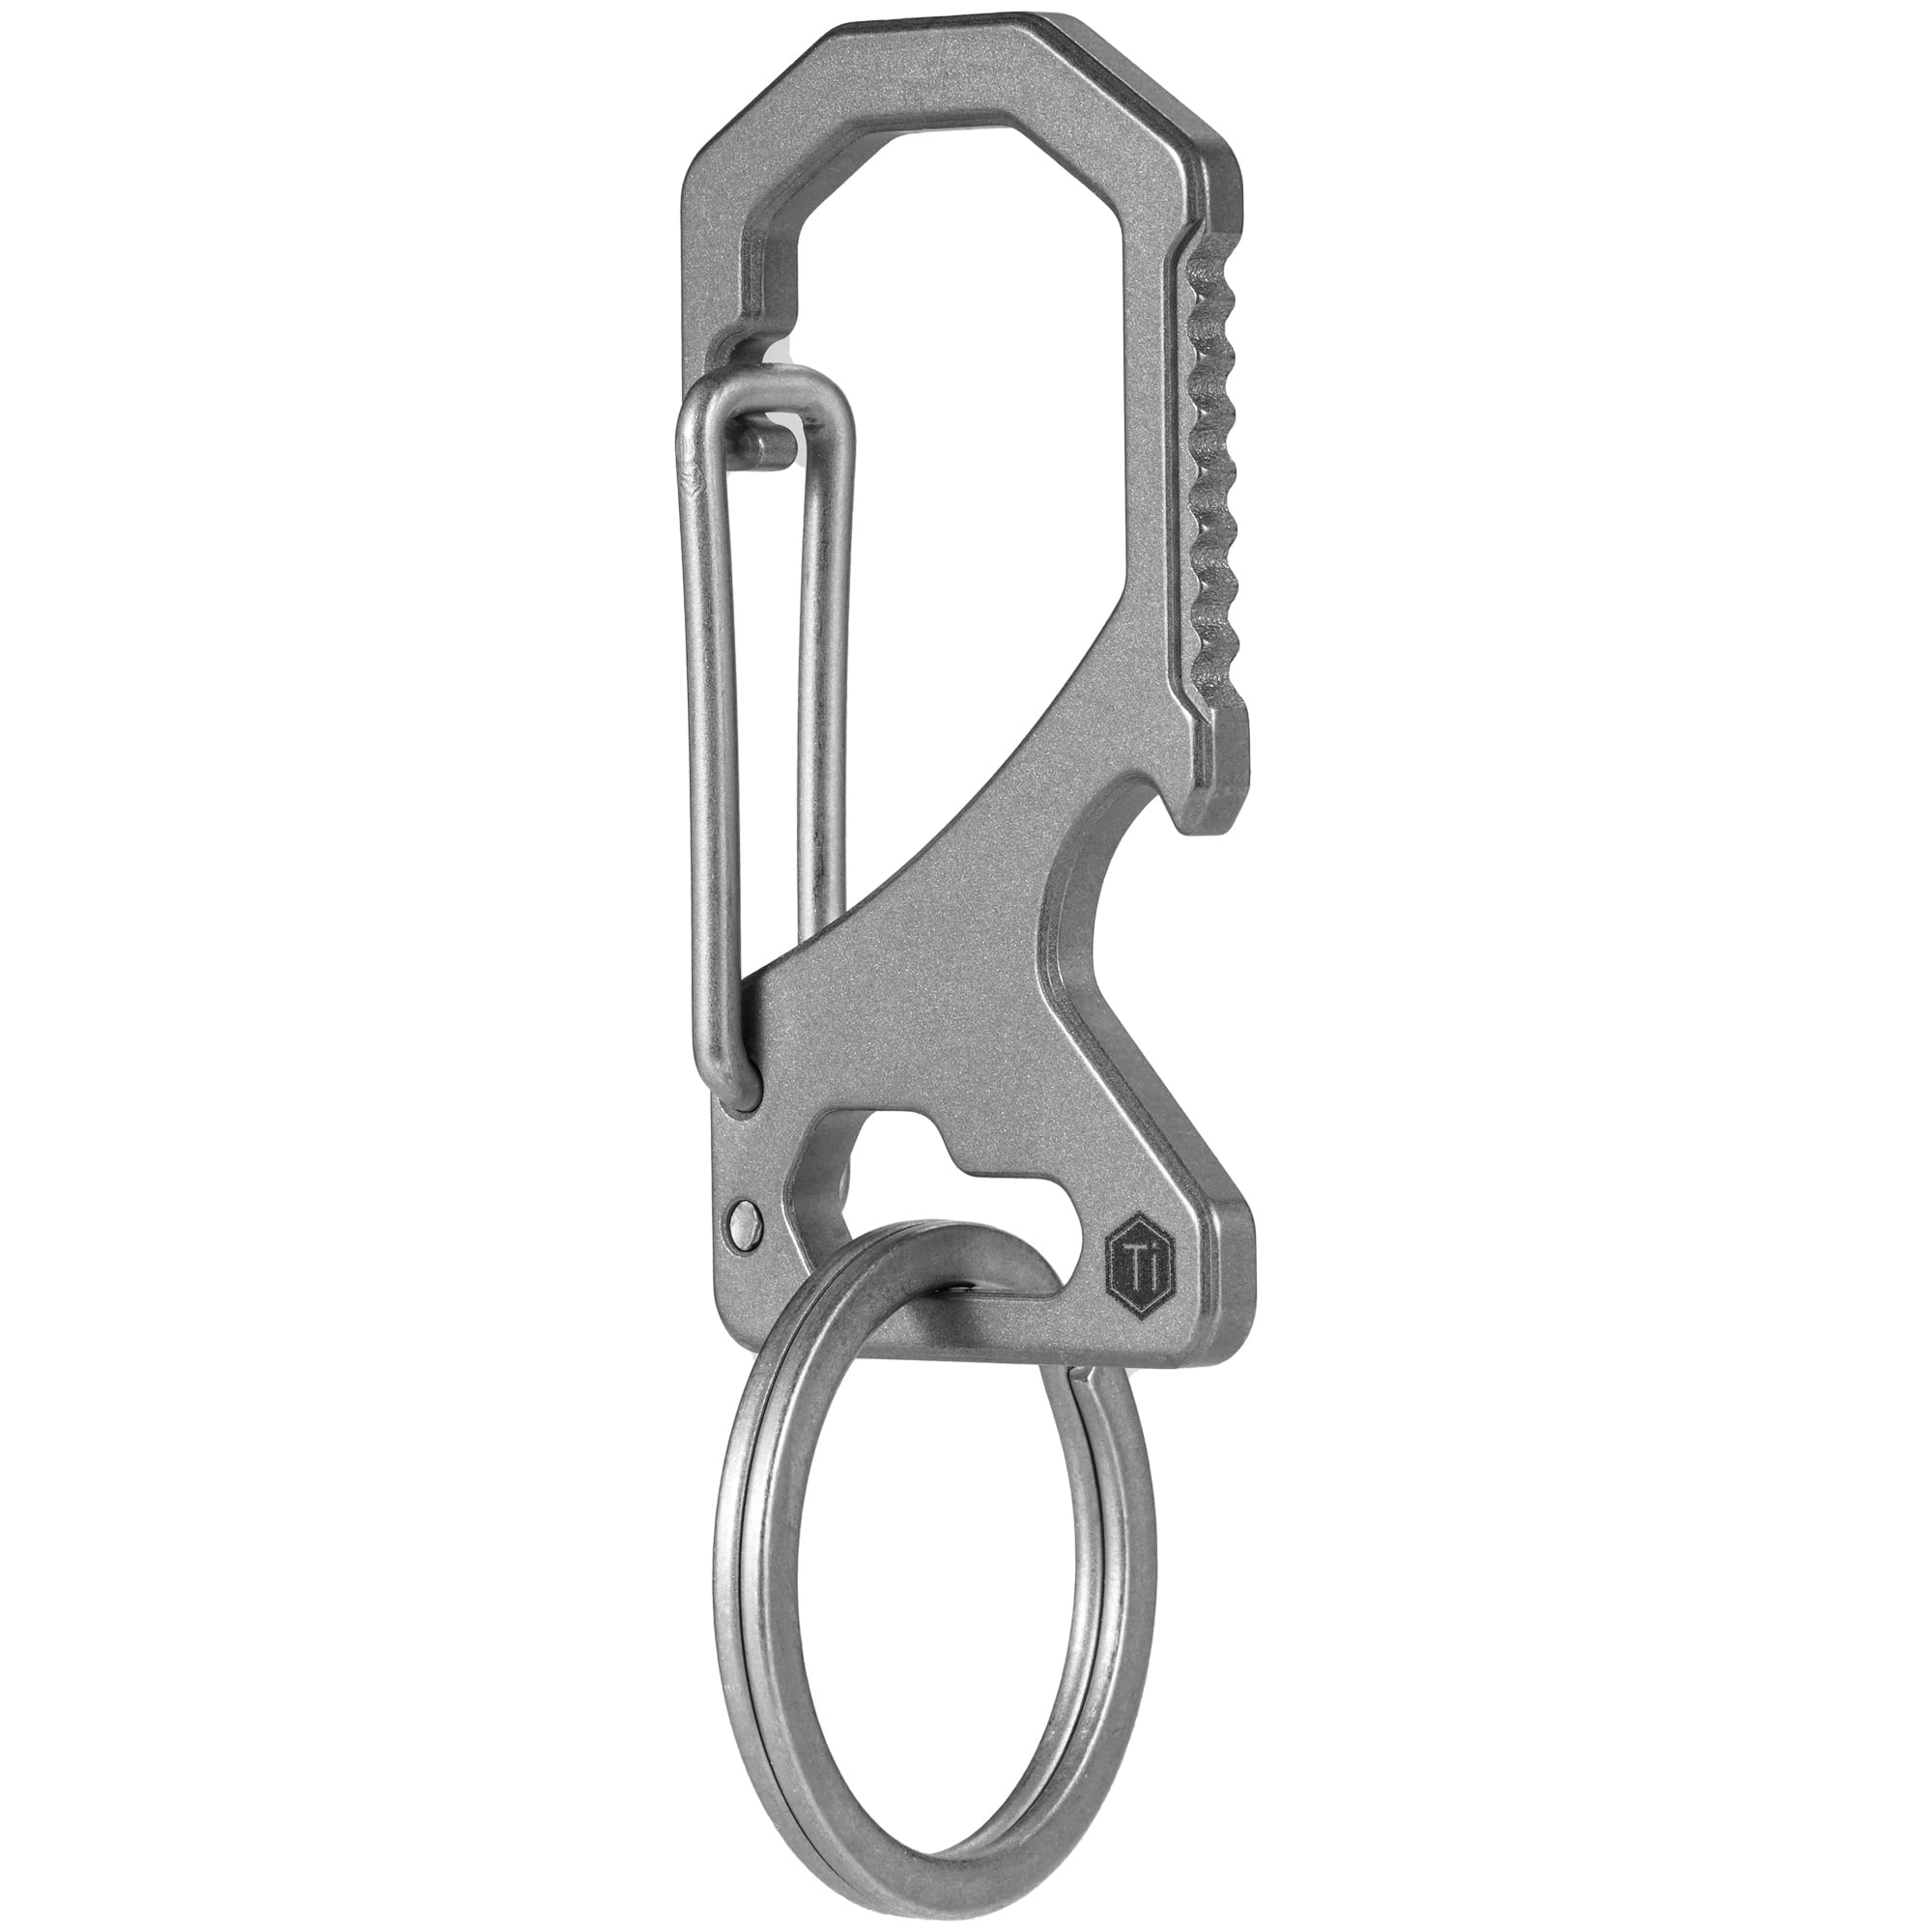 TISUR Titanium Key Ring, Key Chain Rings Heavy Duty Swivel Keyrings  Carabiner Keychain for Men and Women Key Chain Assecories